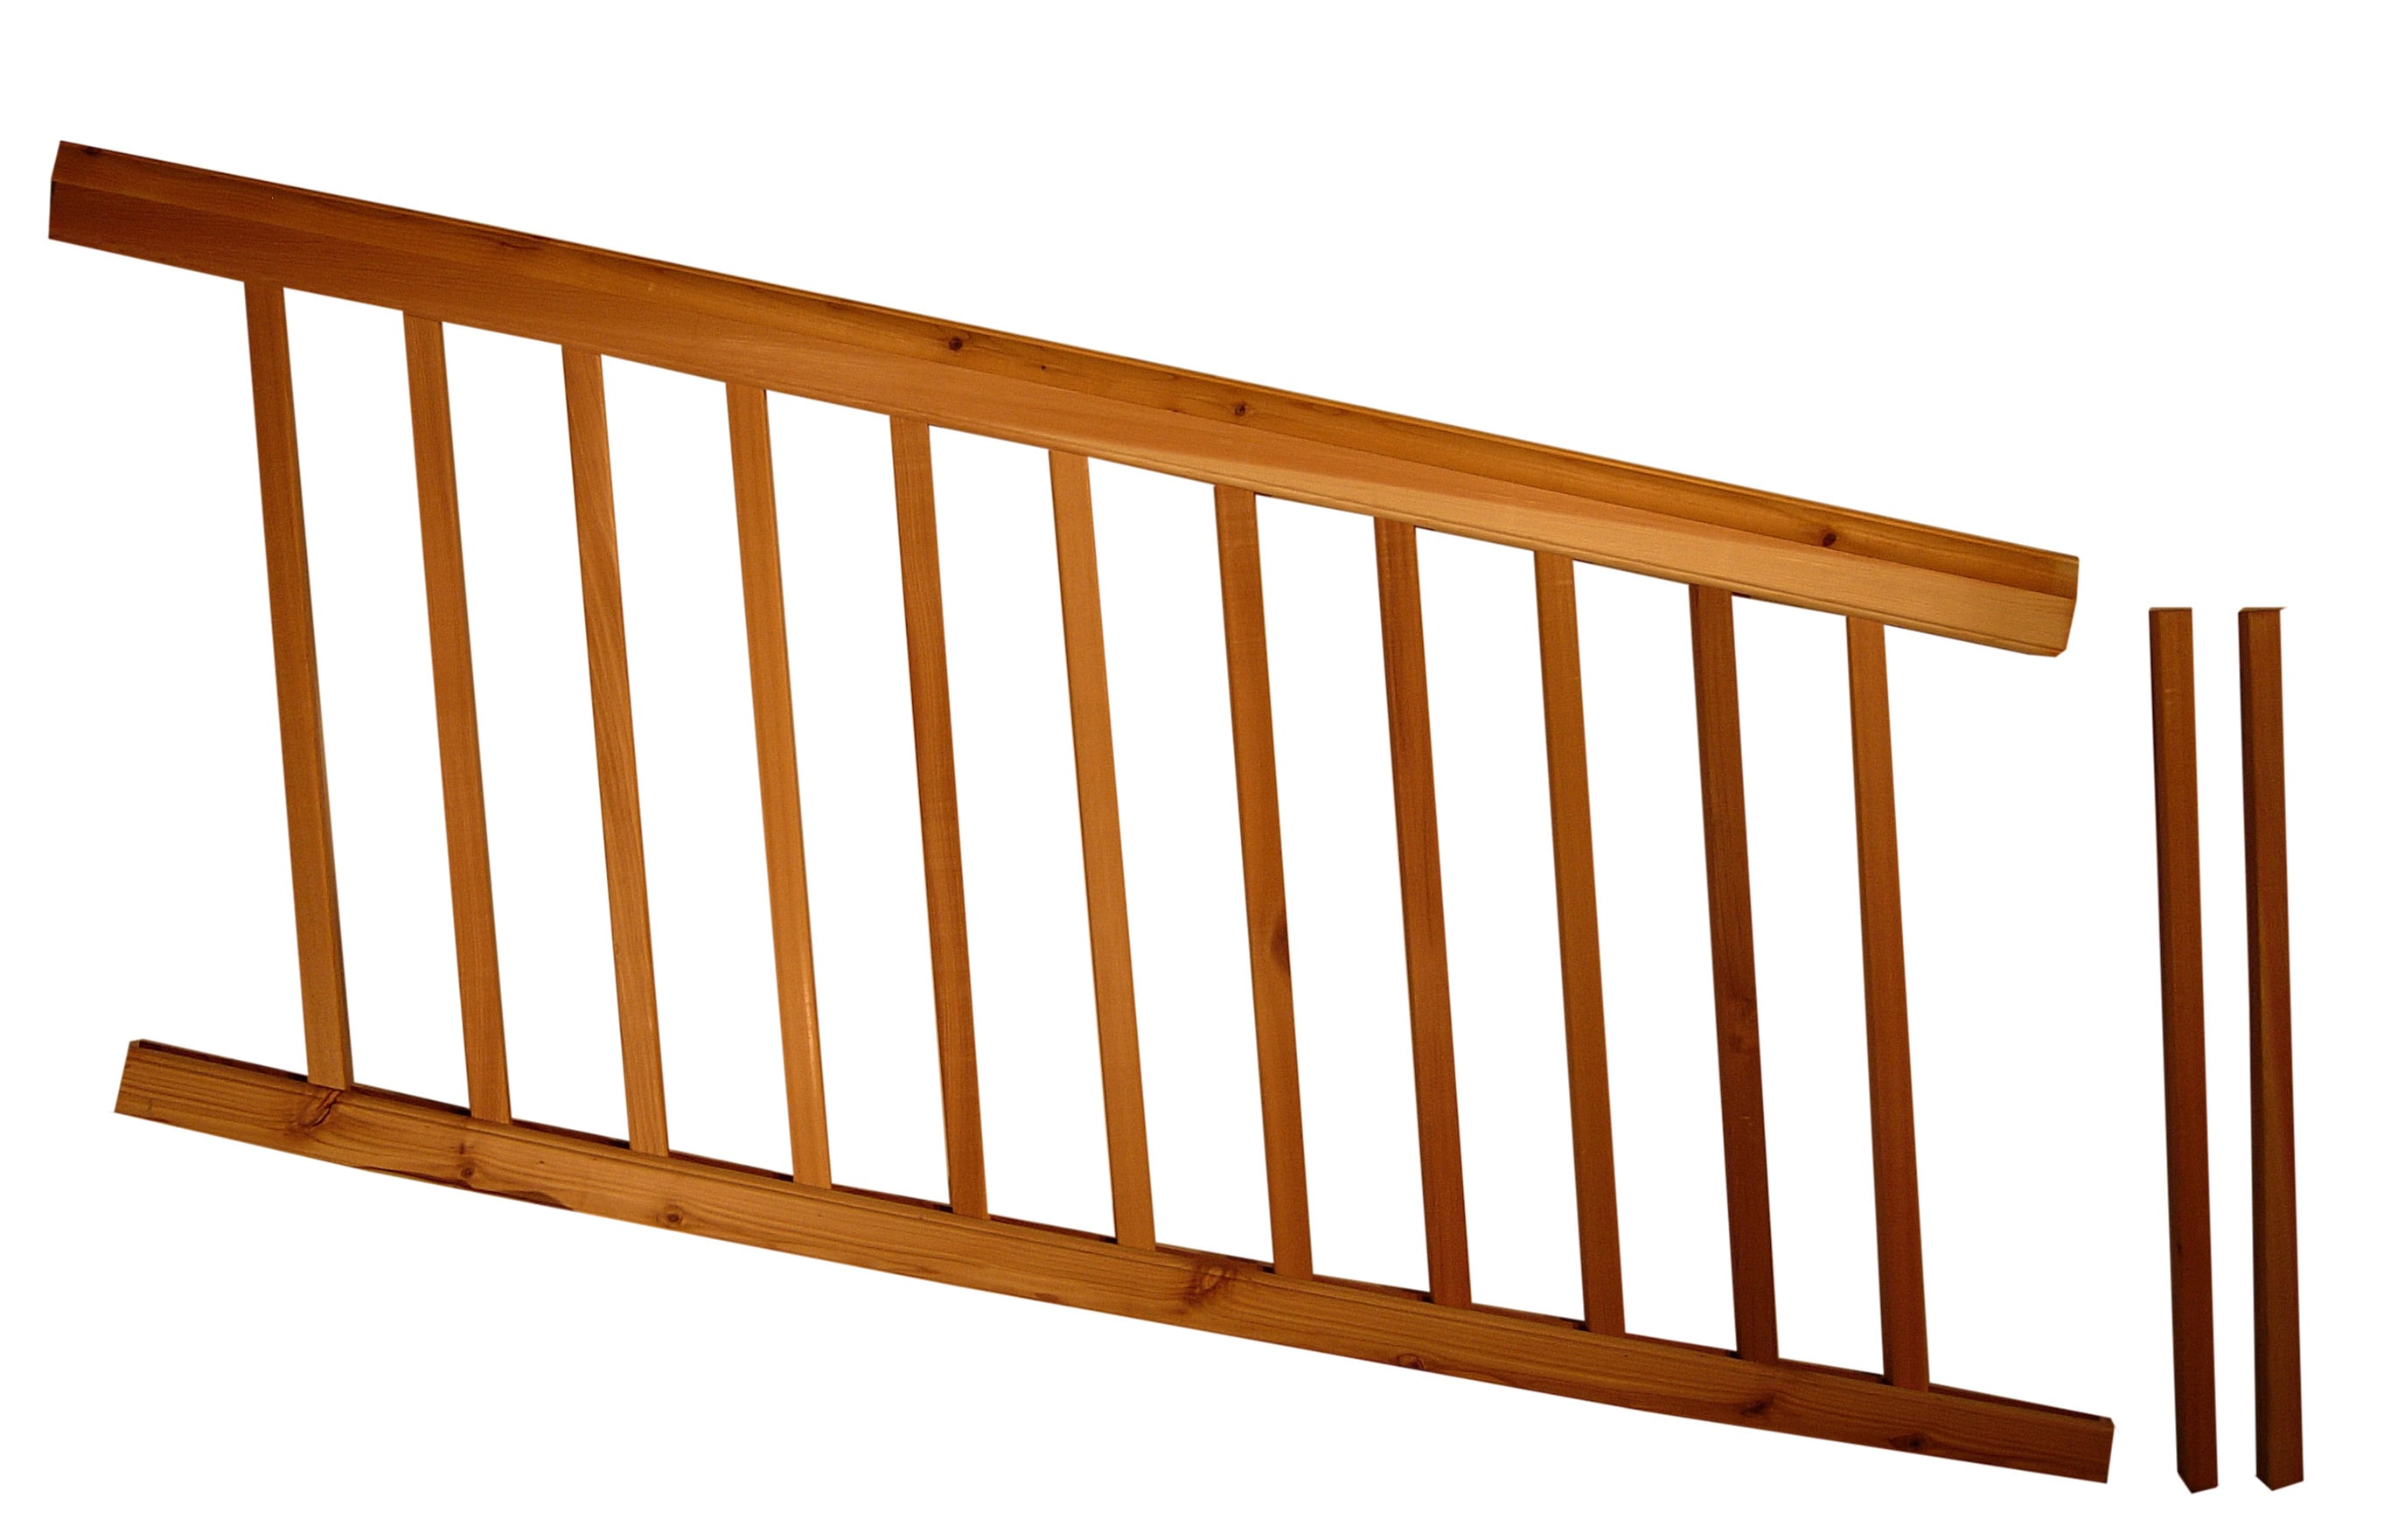 InstaRail Deck Handrails at Lowes.com